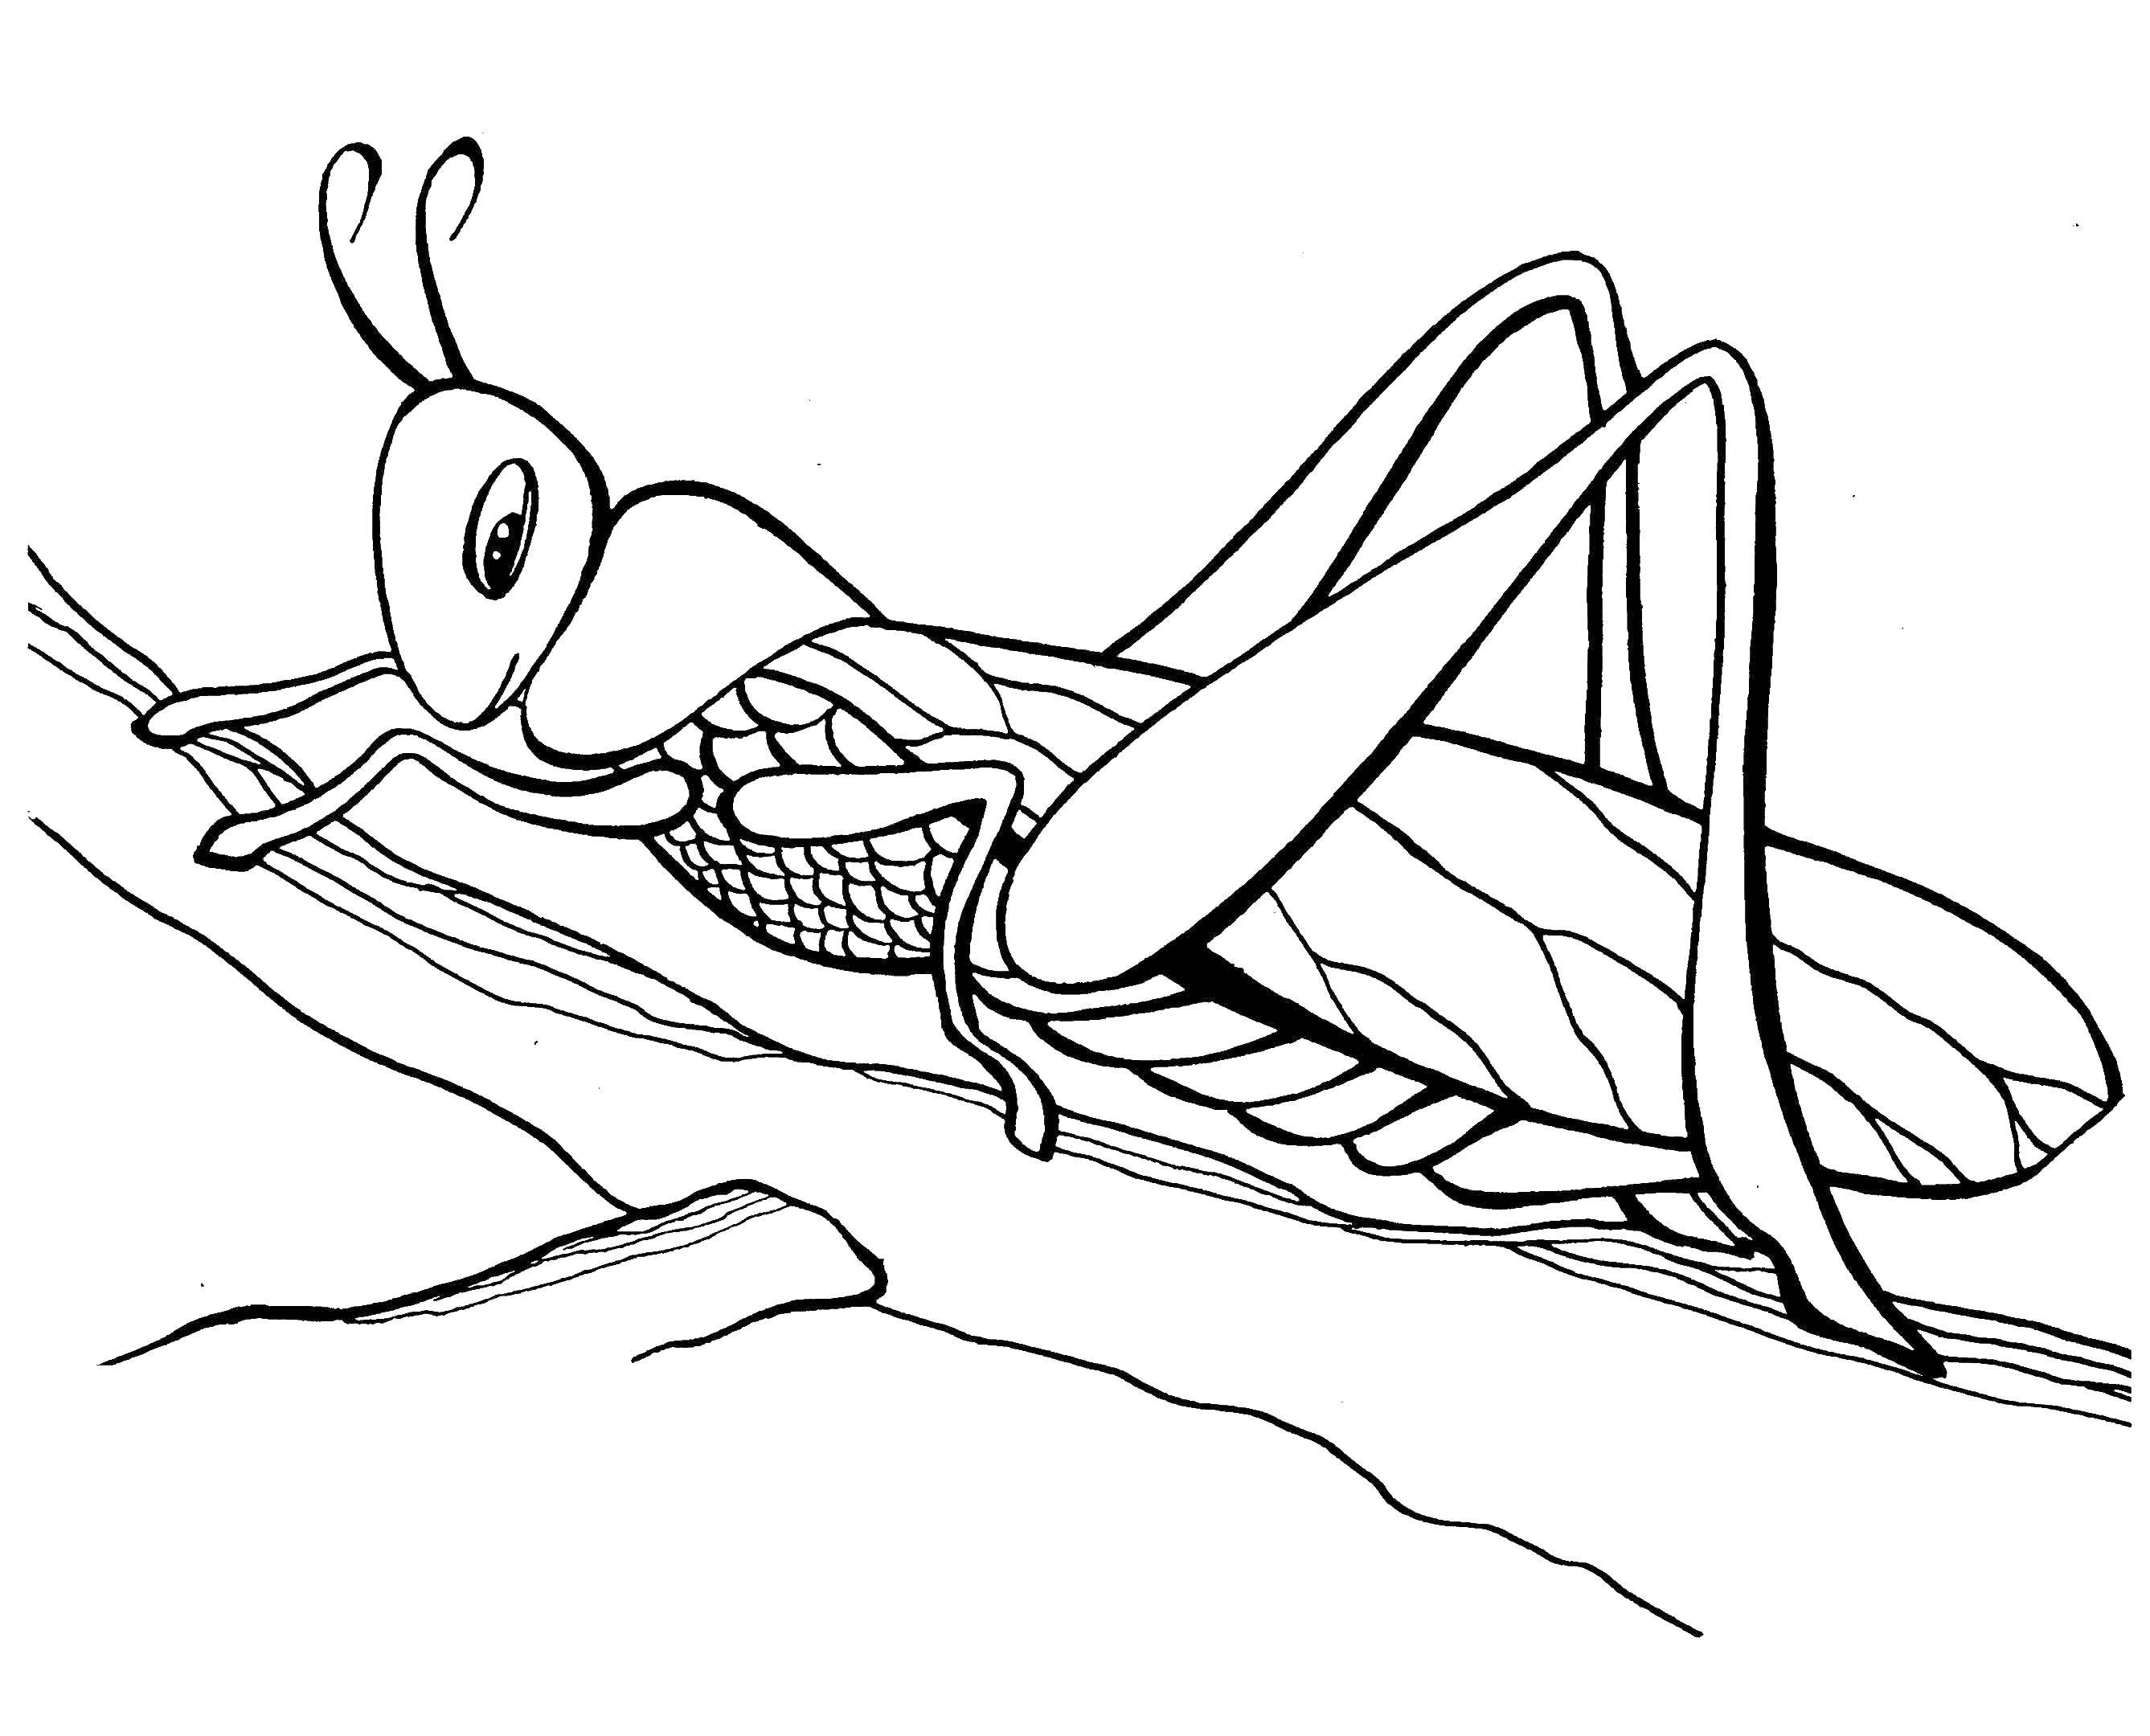 Название: Раскраска Кузнечик на веточке. Категория: Насекомые. Теги: насекомые, кузнечик.